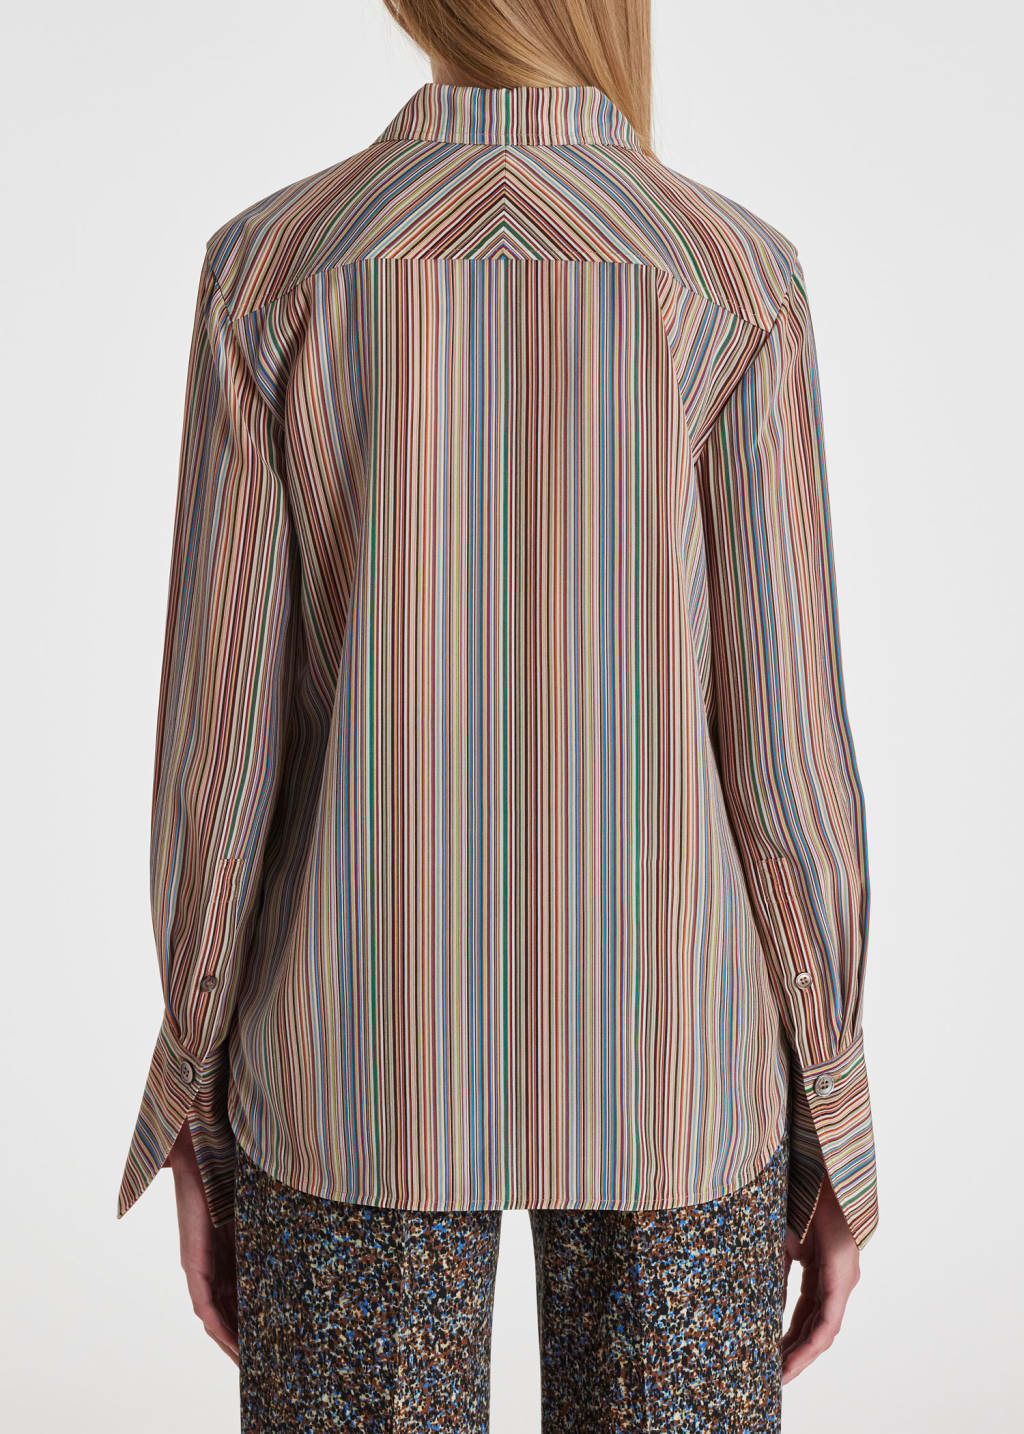 Model View - Women's Silk 'Signature Stripe' Shirt by Paul Smith